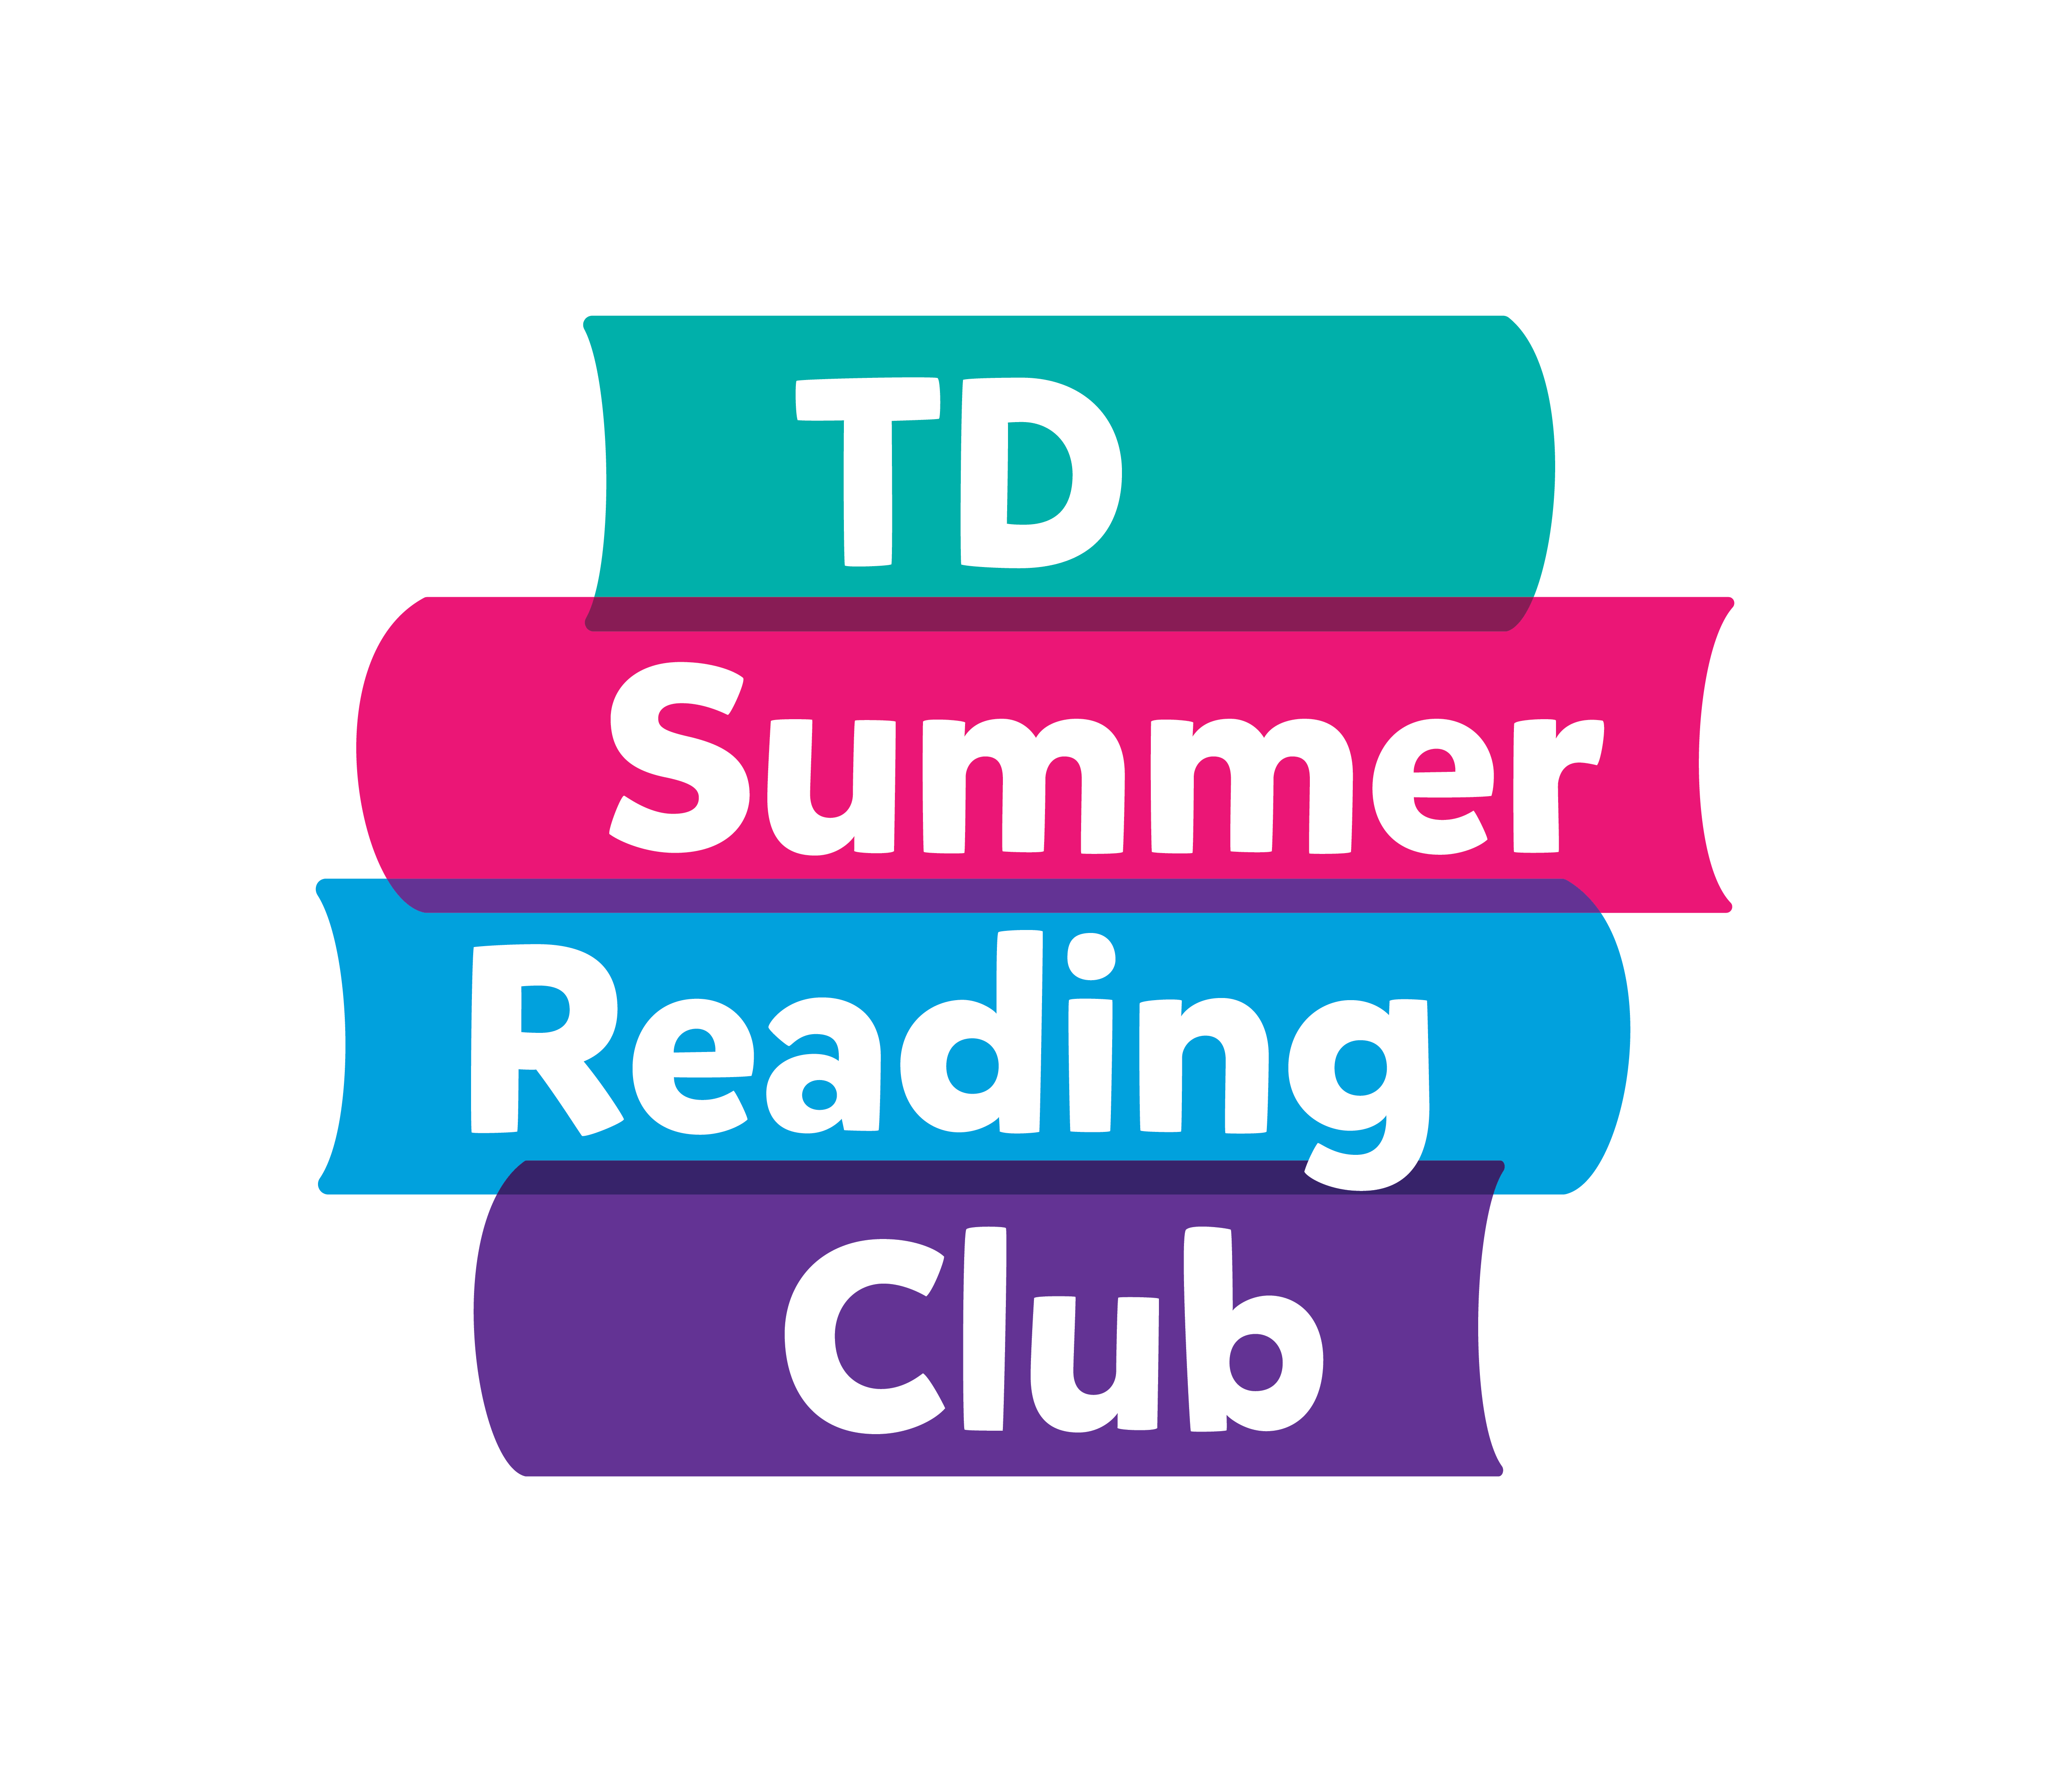 TD Summer Reading Club Text